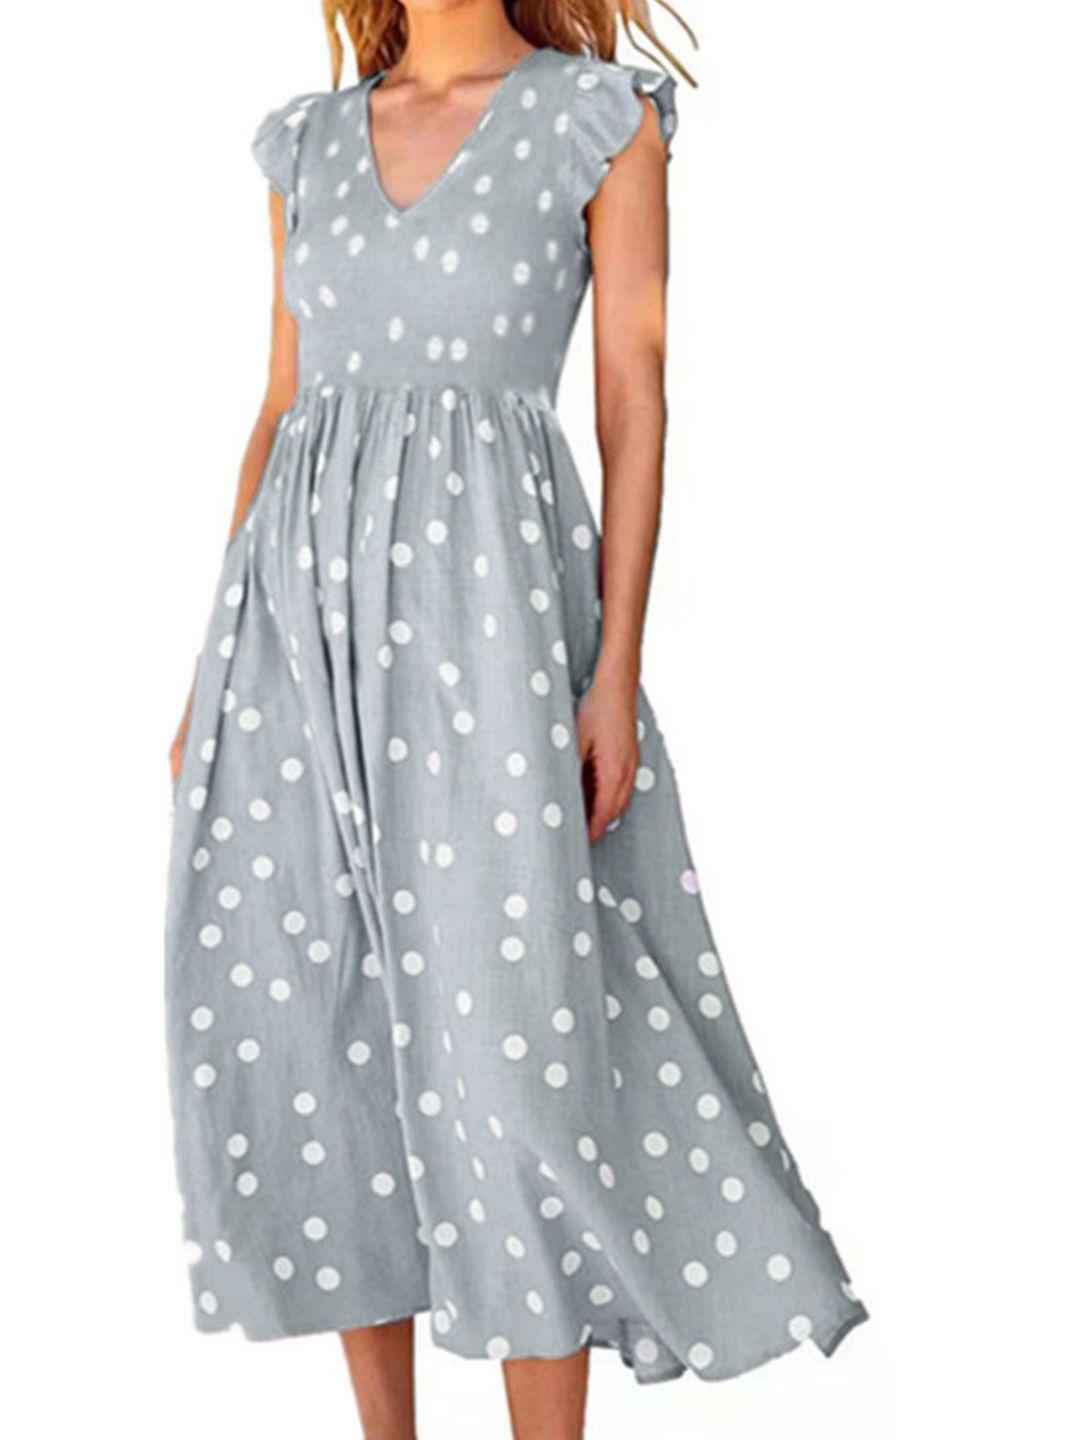 stylecast grey print fit & flare polka dress cotton midi dress